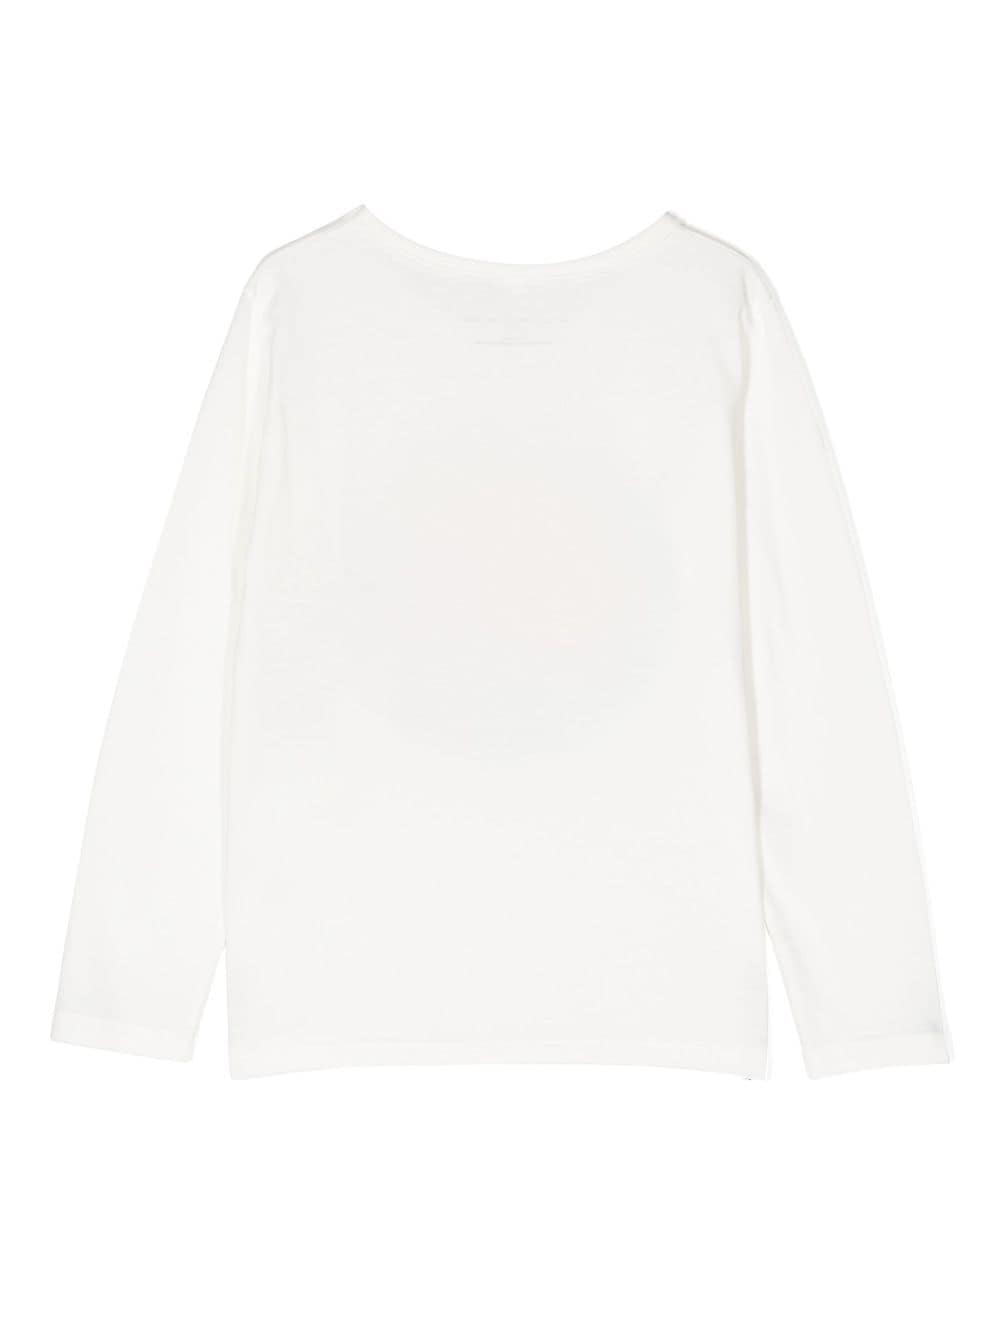 White cotton jersey girl STELLA McCARTNEY t-shirt | Carofiglio Junior